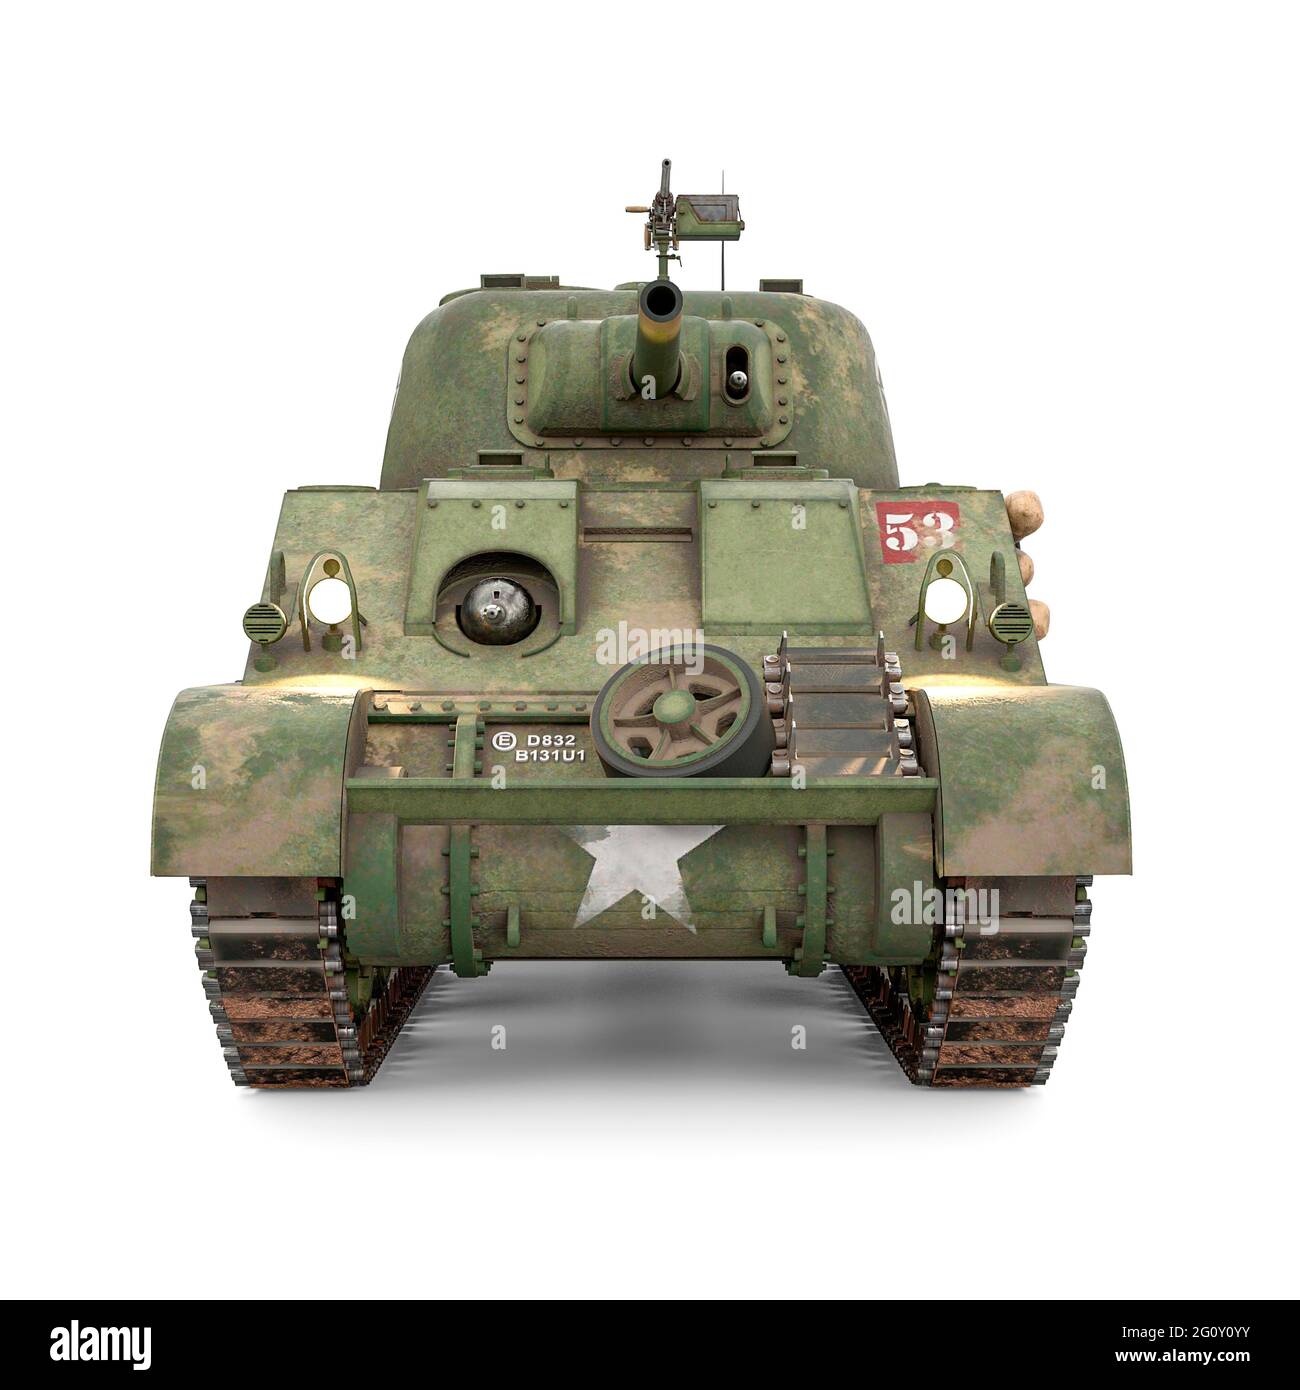 https://c8.alamy.com/comp/2G0Y0YY/us-army-tank-front-view-3d-illustration-2G0Y0YY.jpg